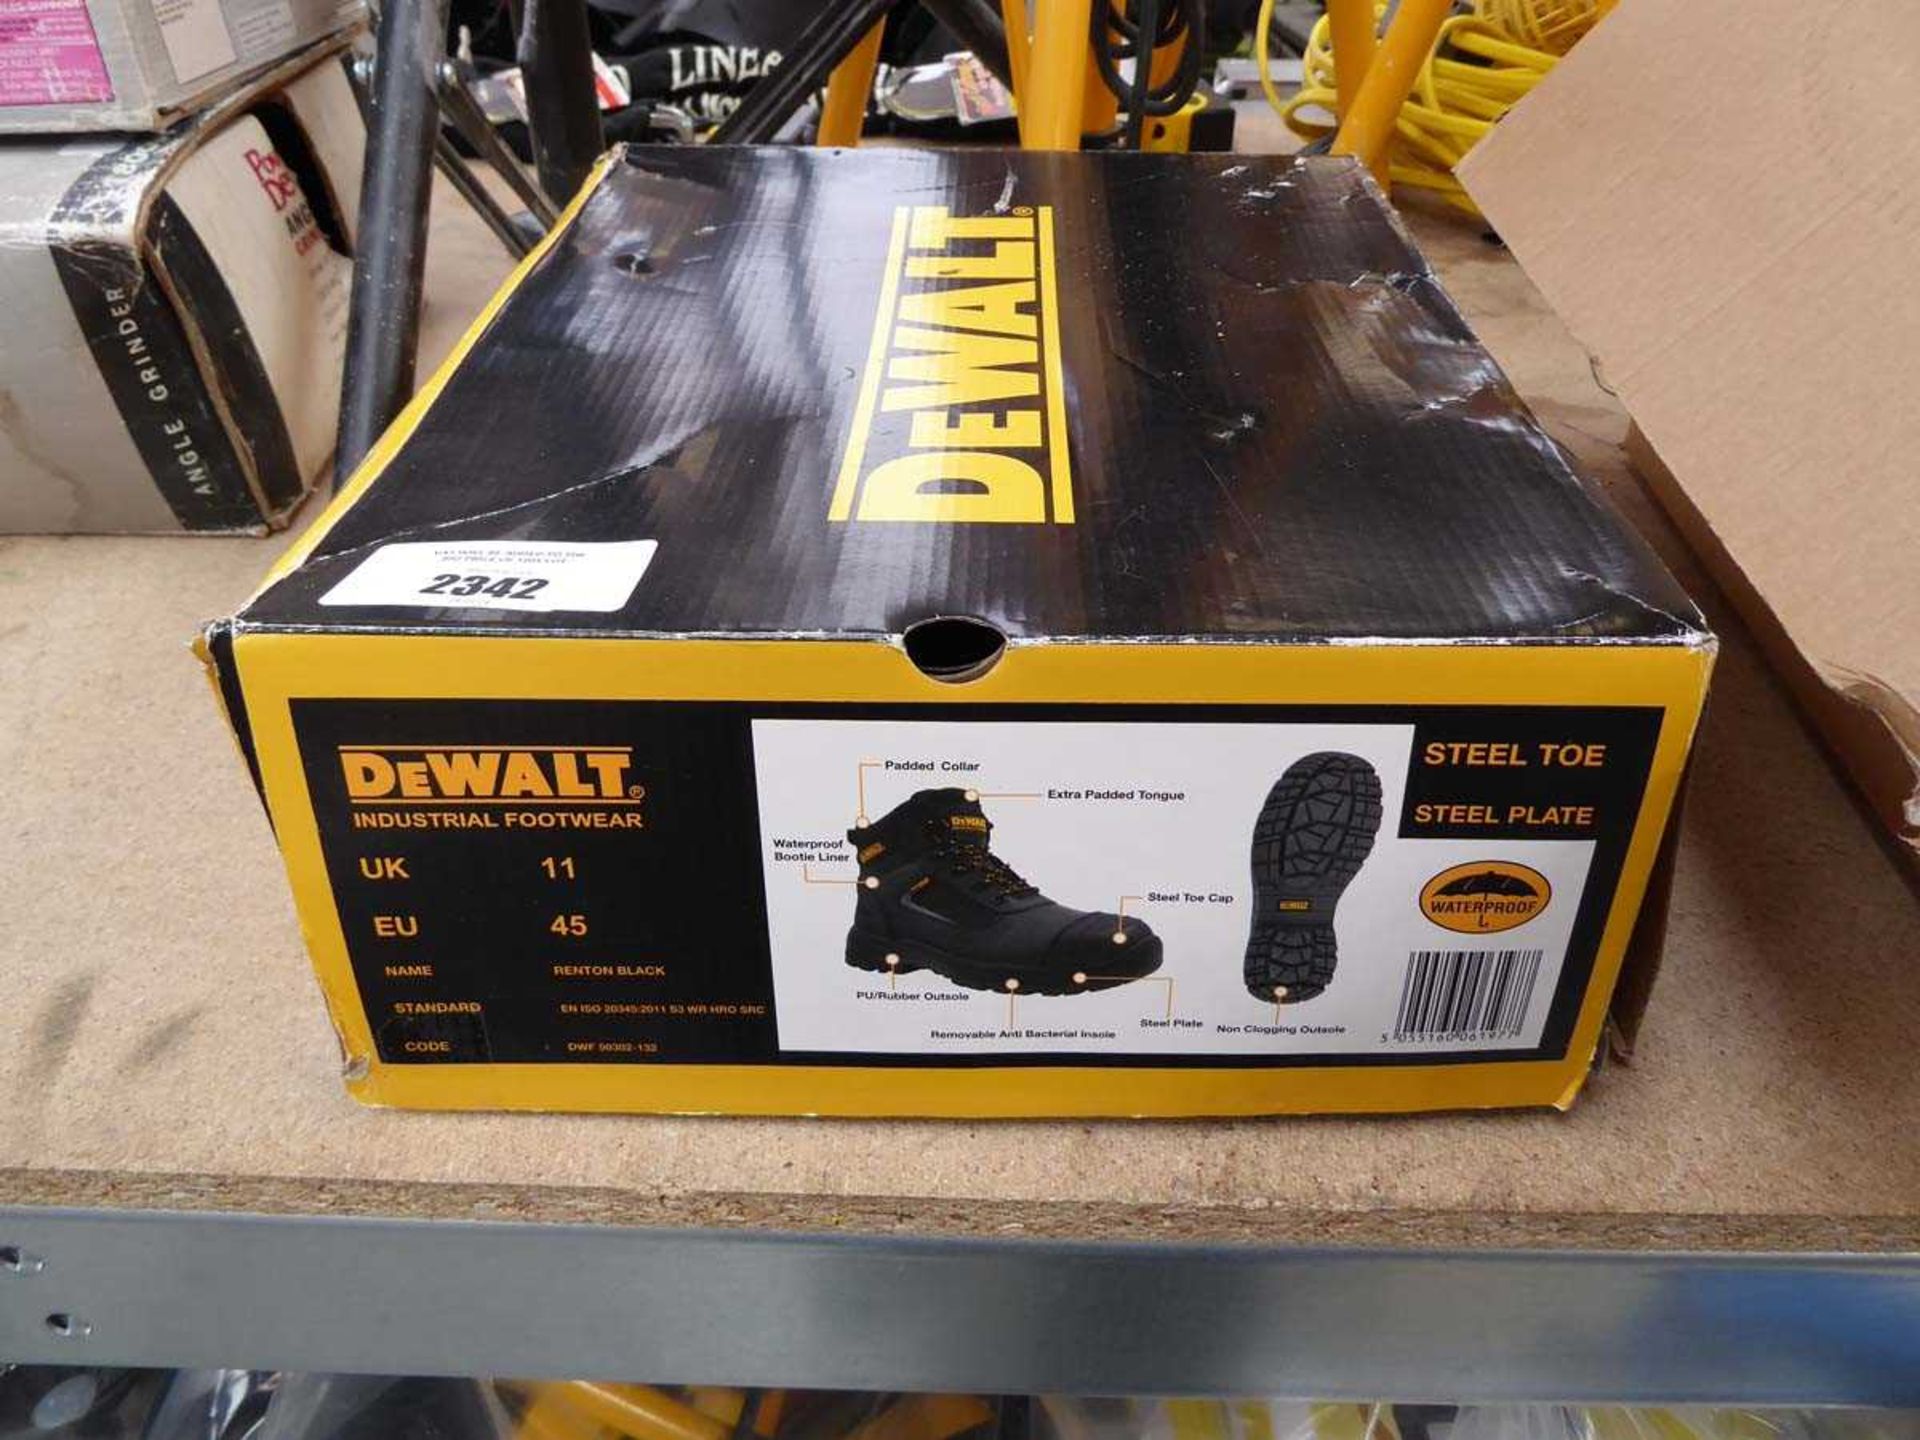 Box of DeWalt Renton Black steel toe safety boots (size 11)